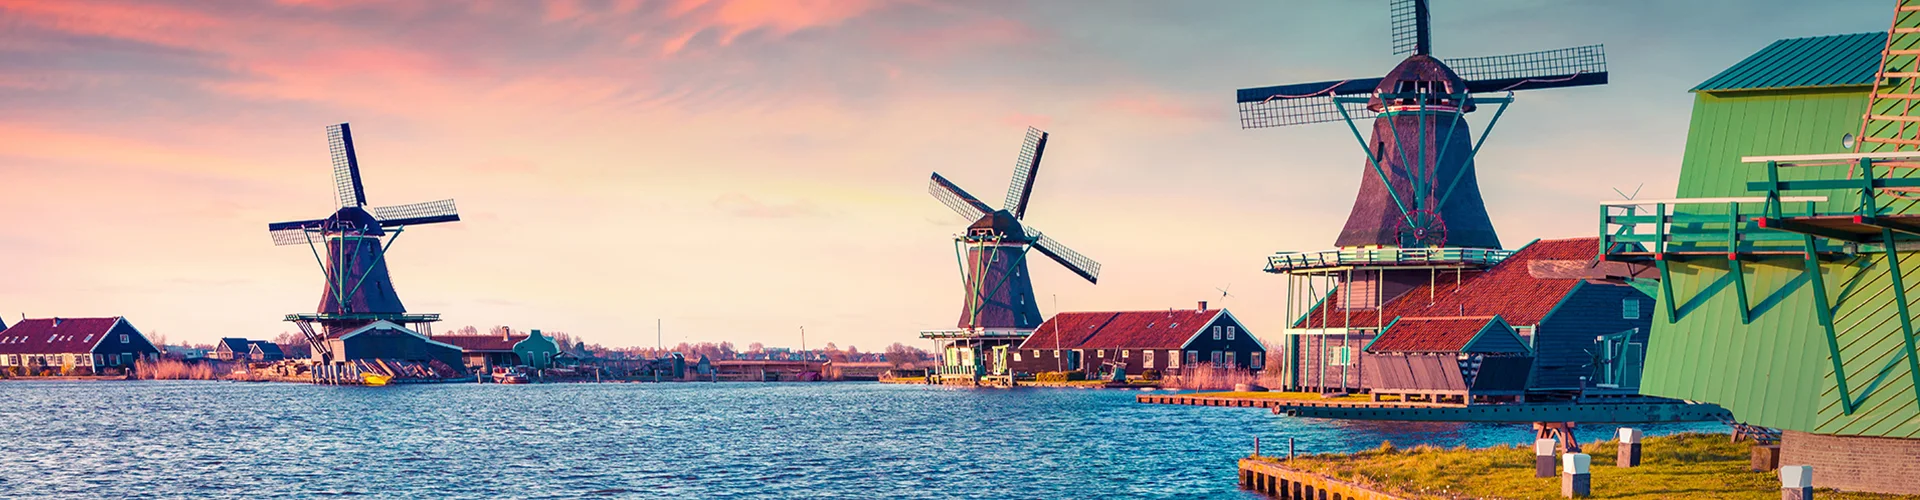 amsterdam-windmills-zaanse-schans-netherlands